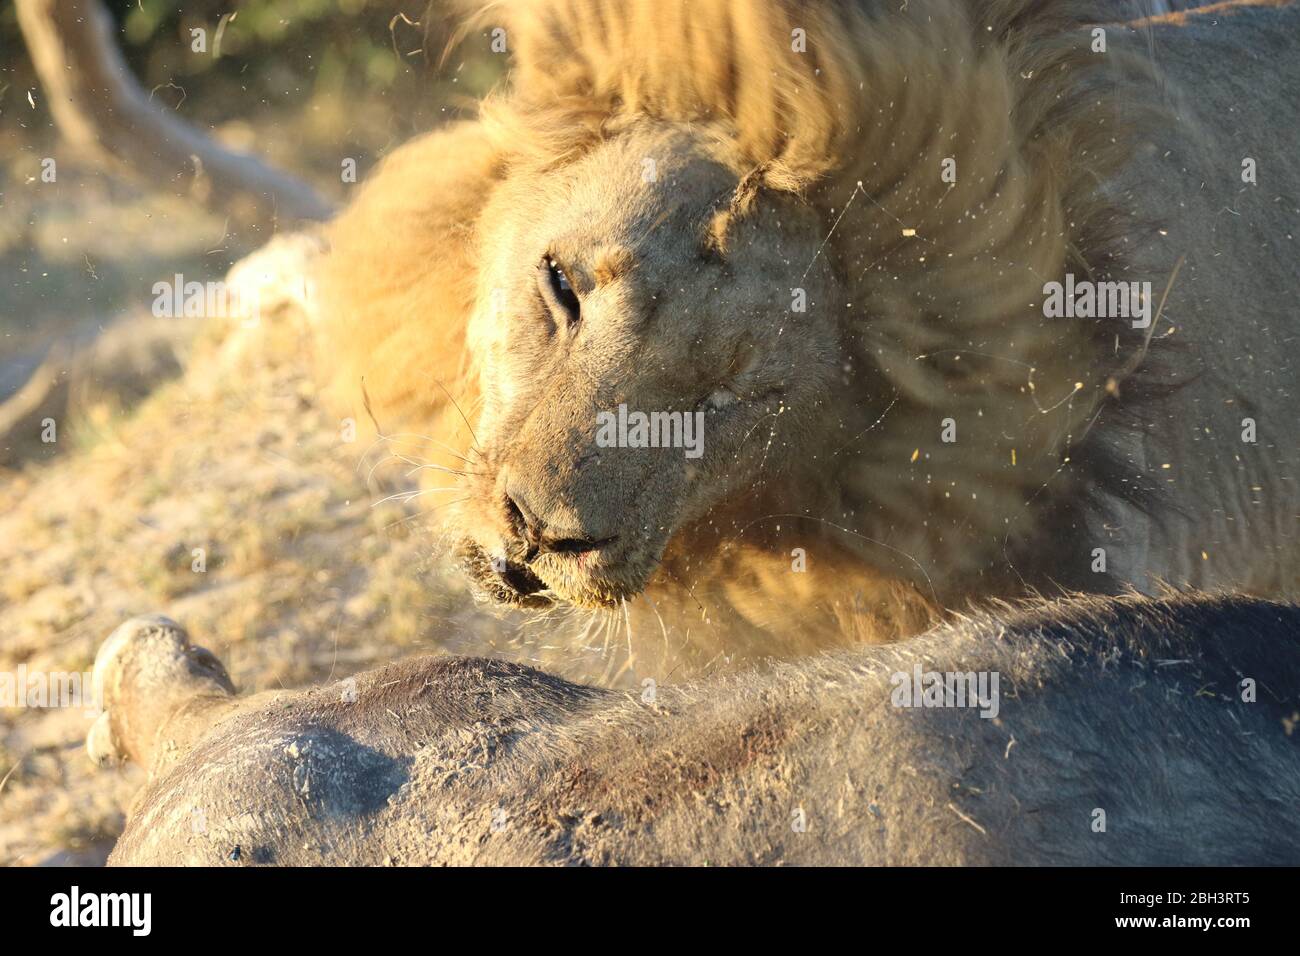 Male lion feeding on a carcass Stock Photo